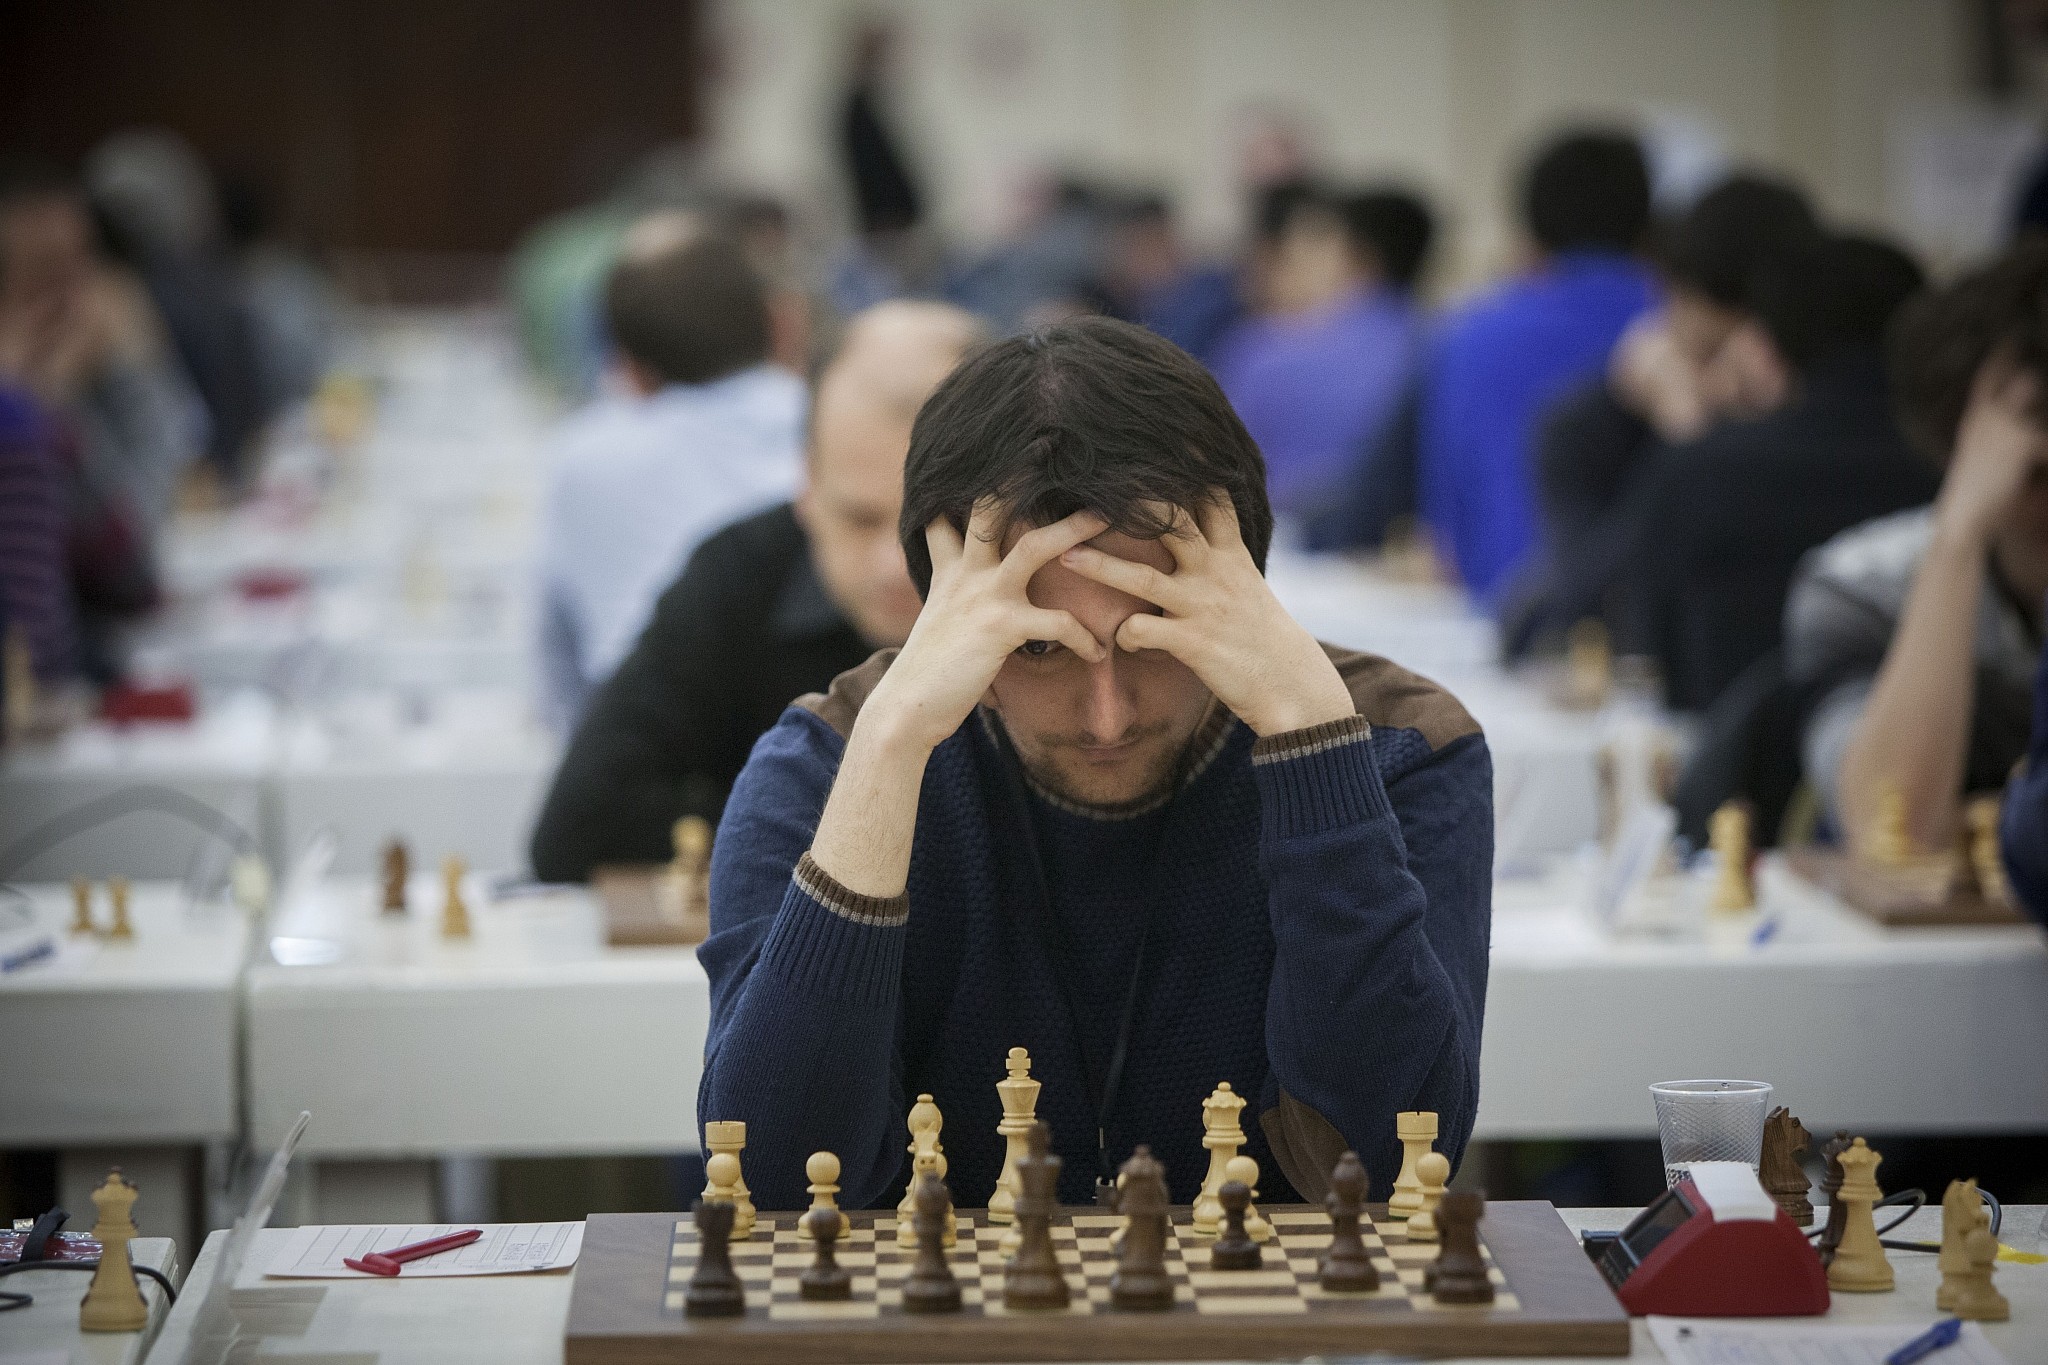 Arábia Saudita recusou vistos a jogadores israelitas para Mundial de xadrez  - SIC Notícias